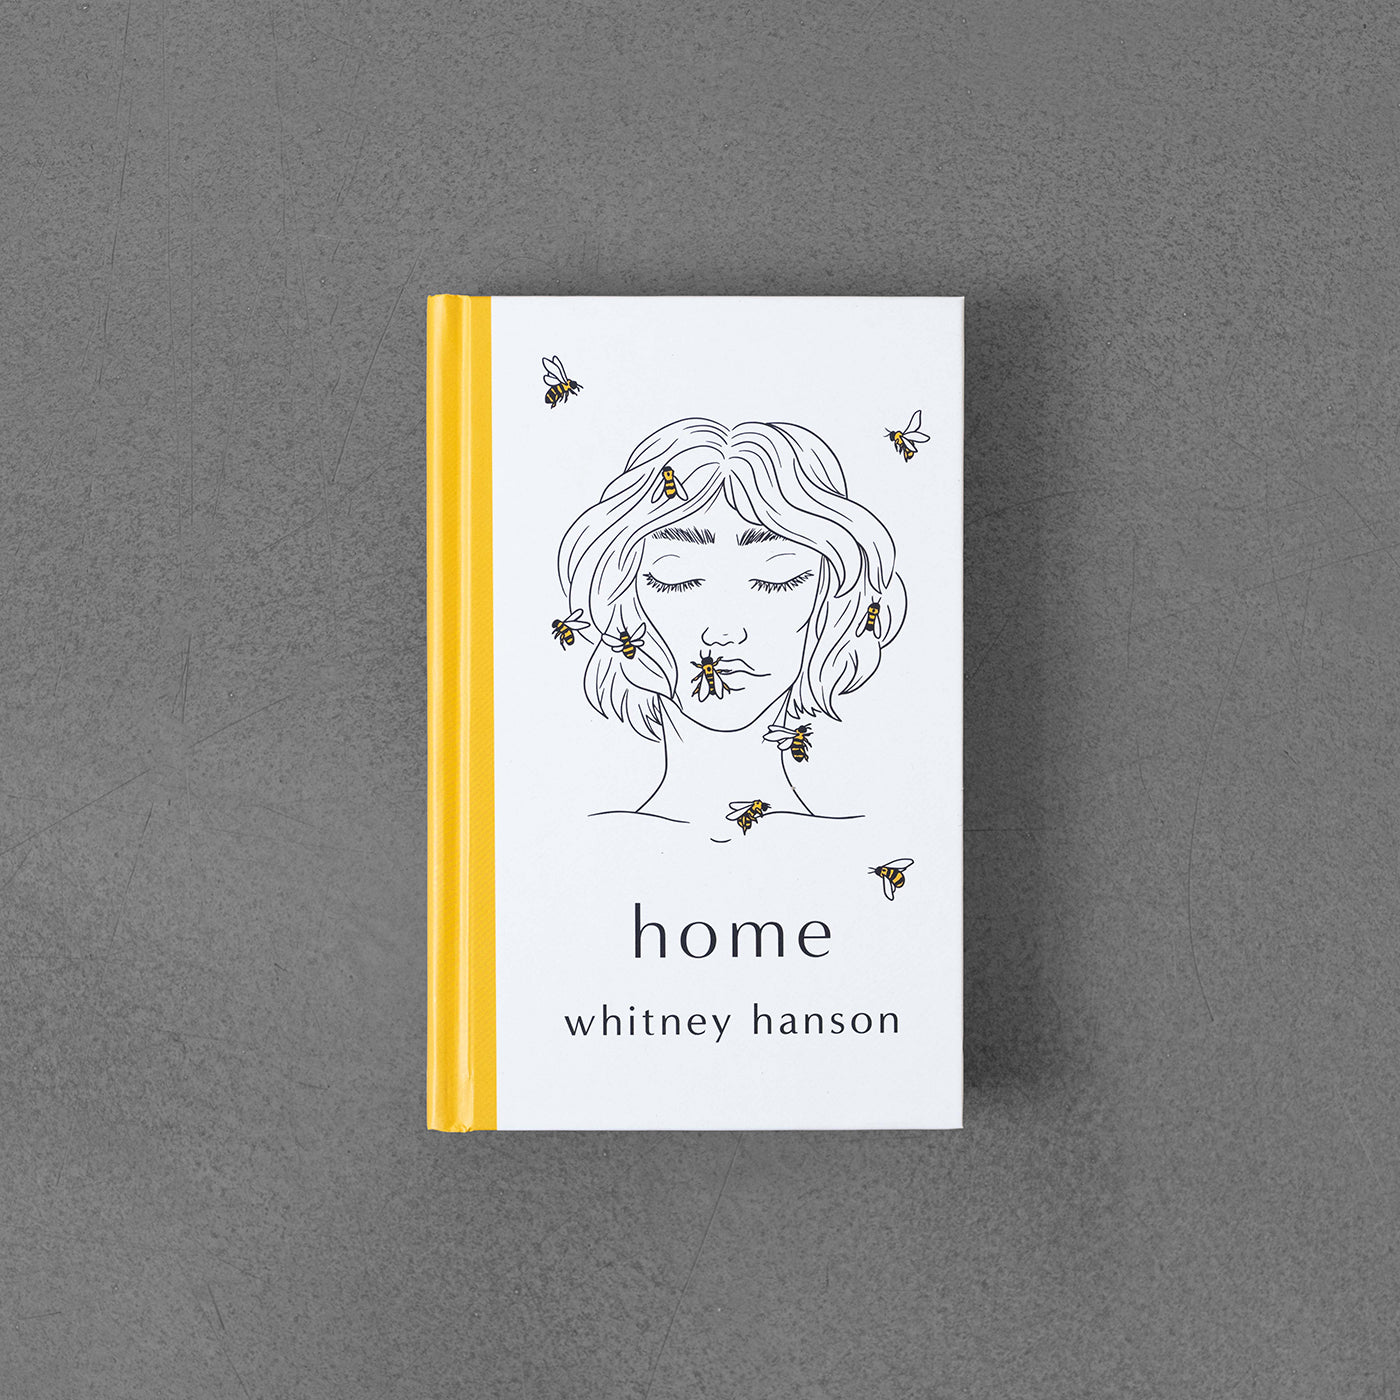 Home - Whitney Hanson